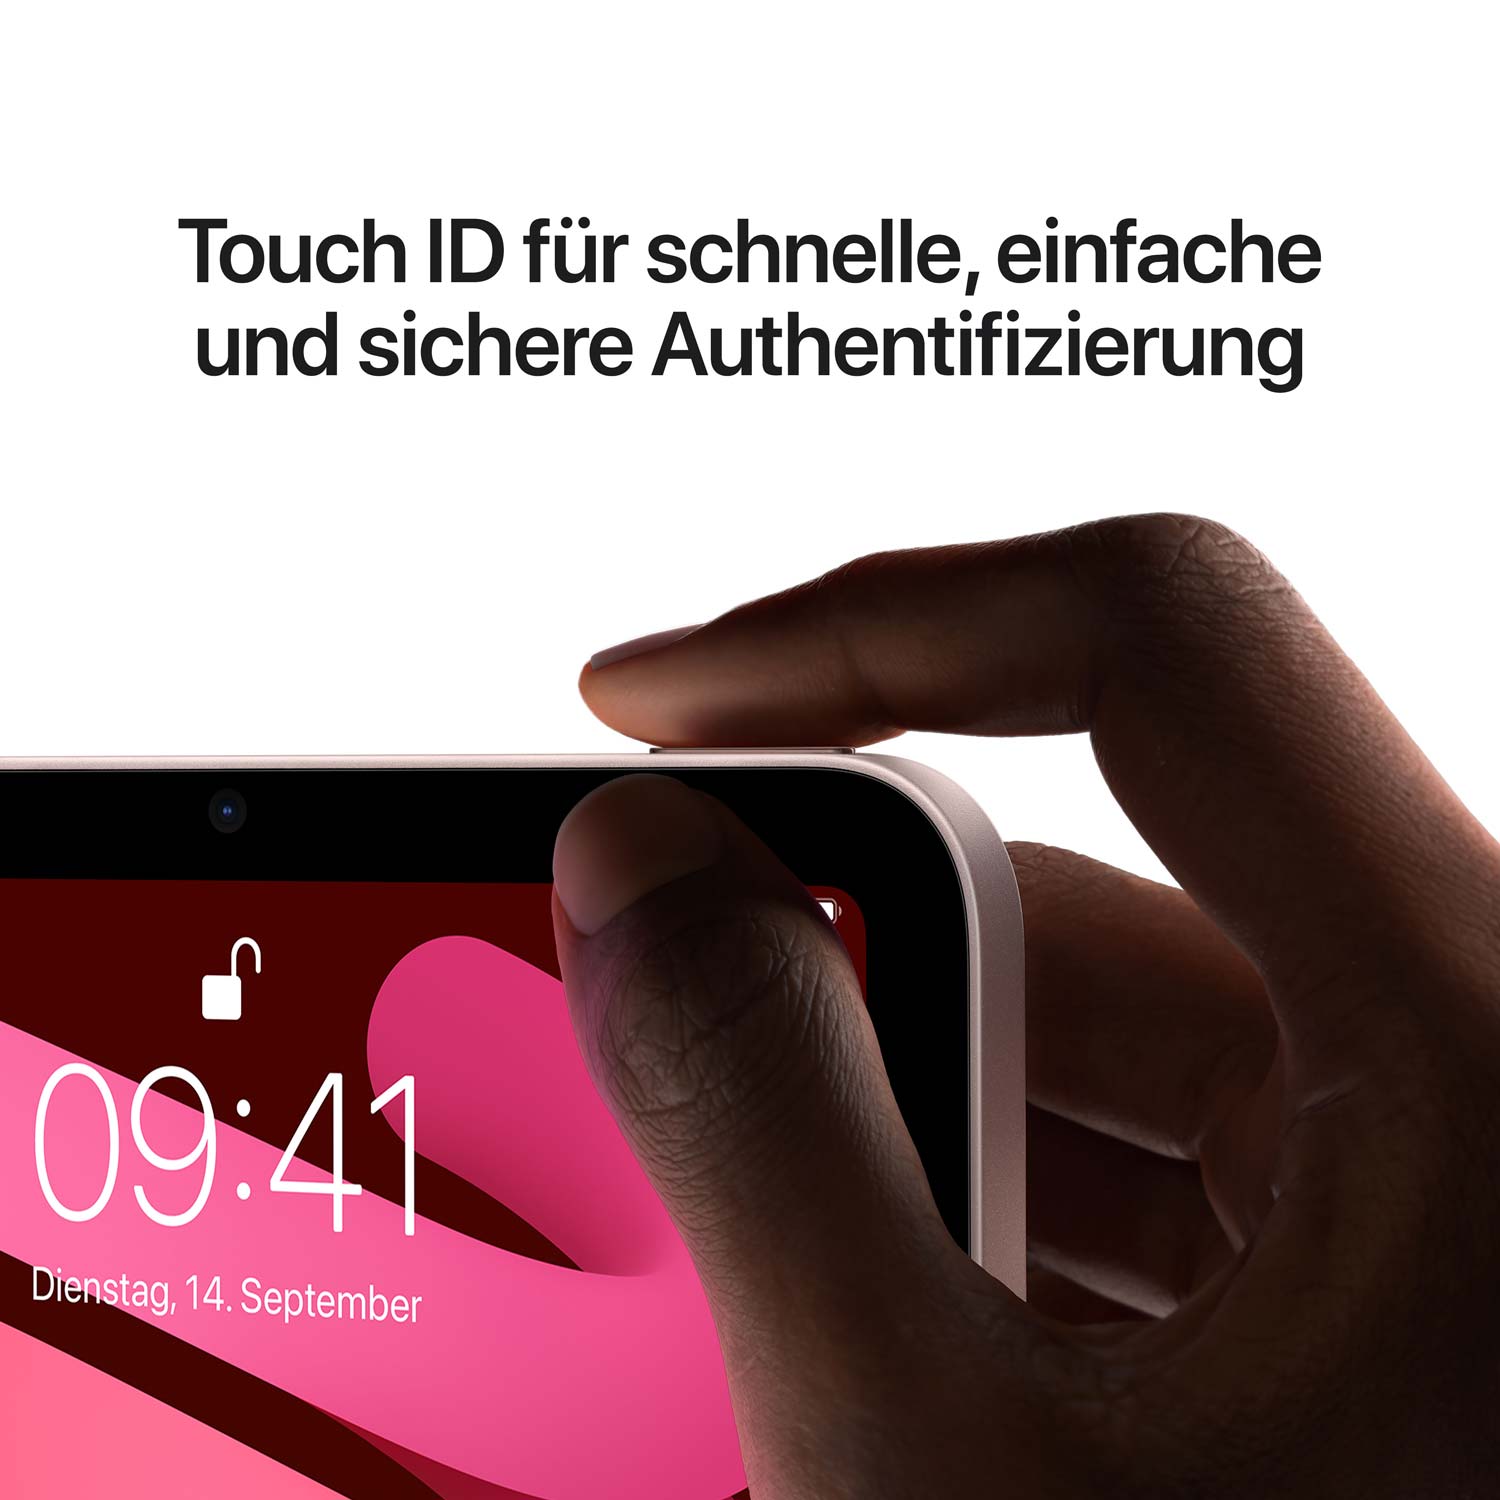 Apple iPad mini 8.3 Wi-Fi 64GB pink